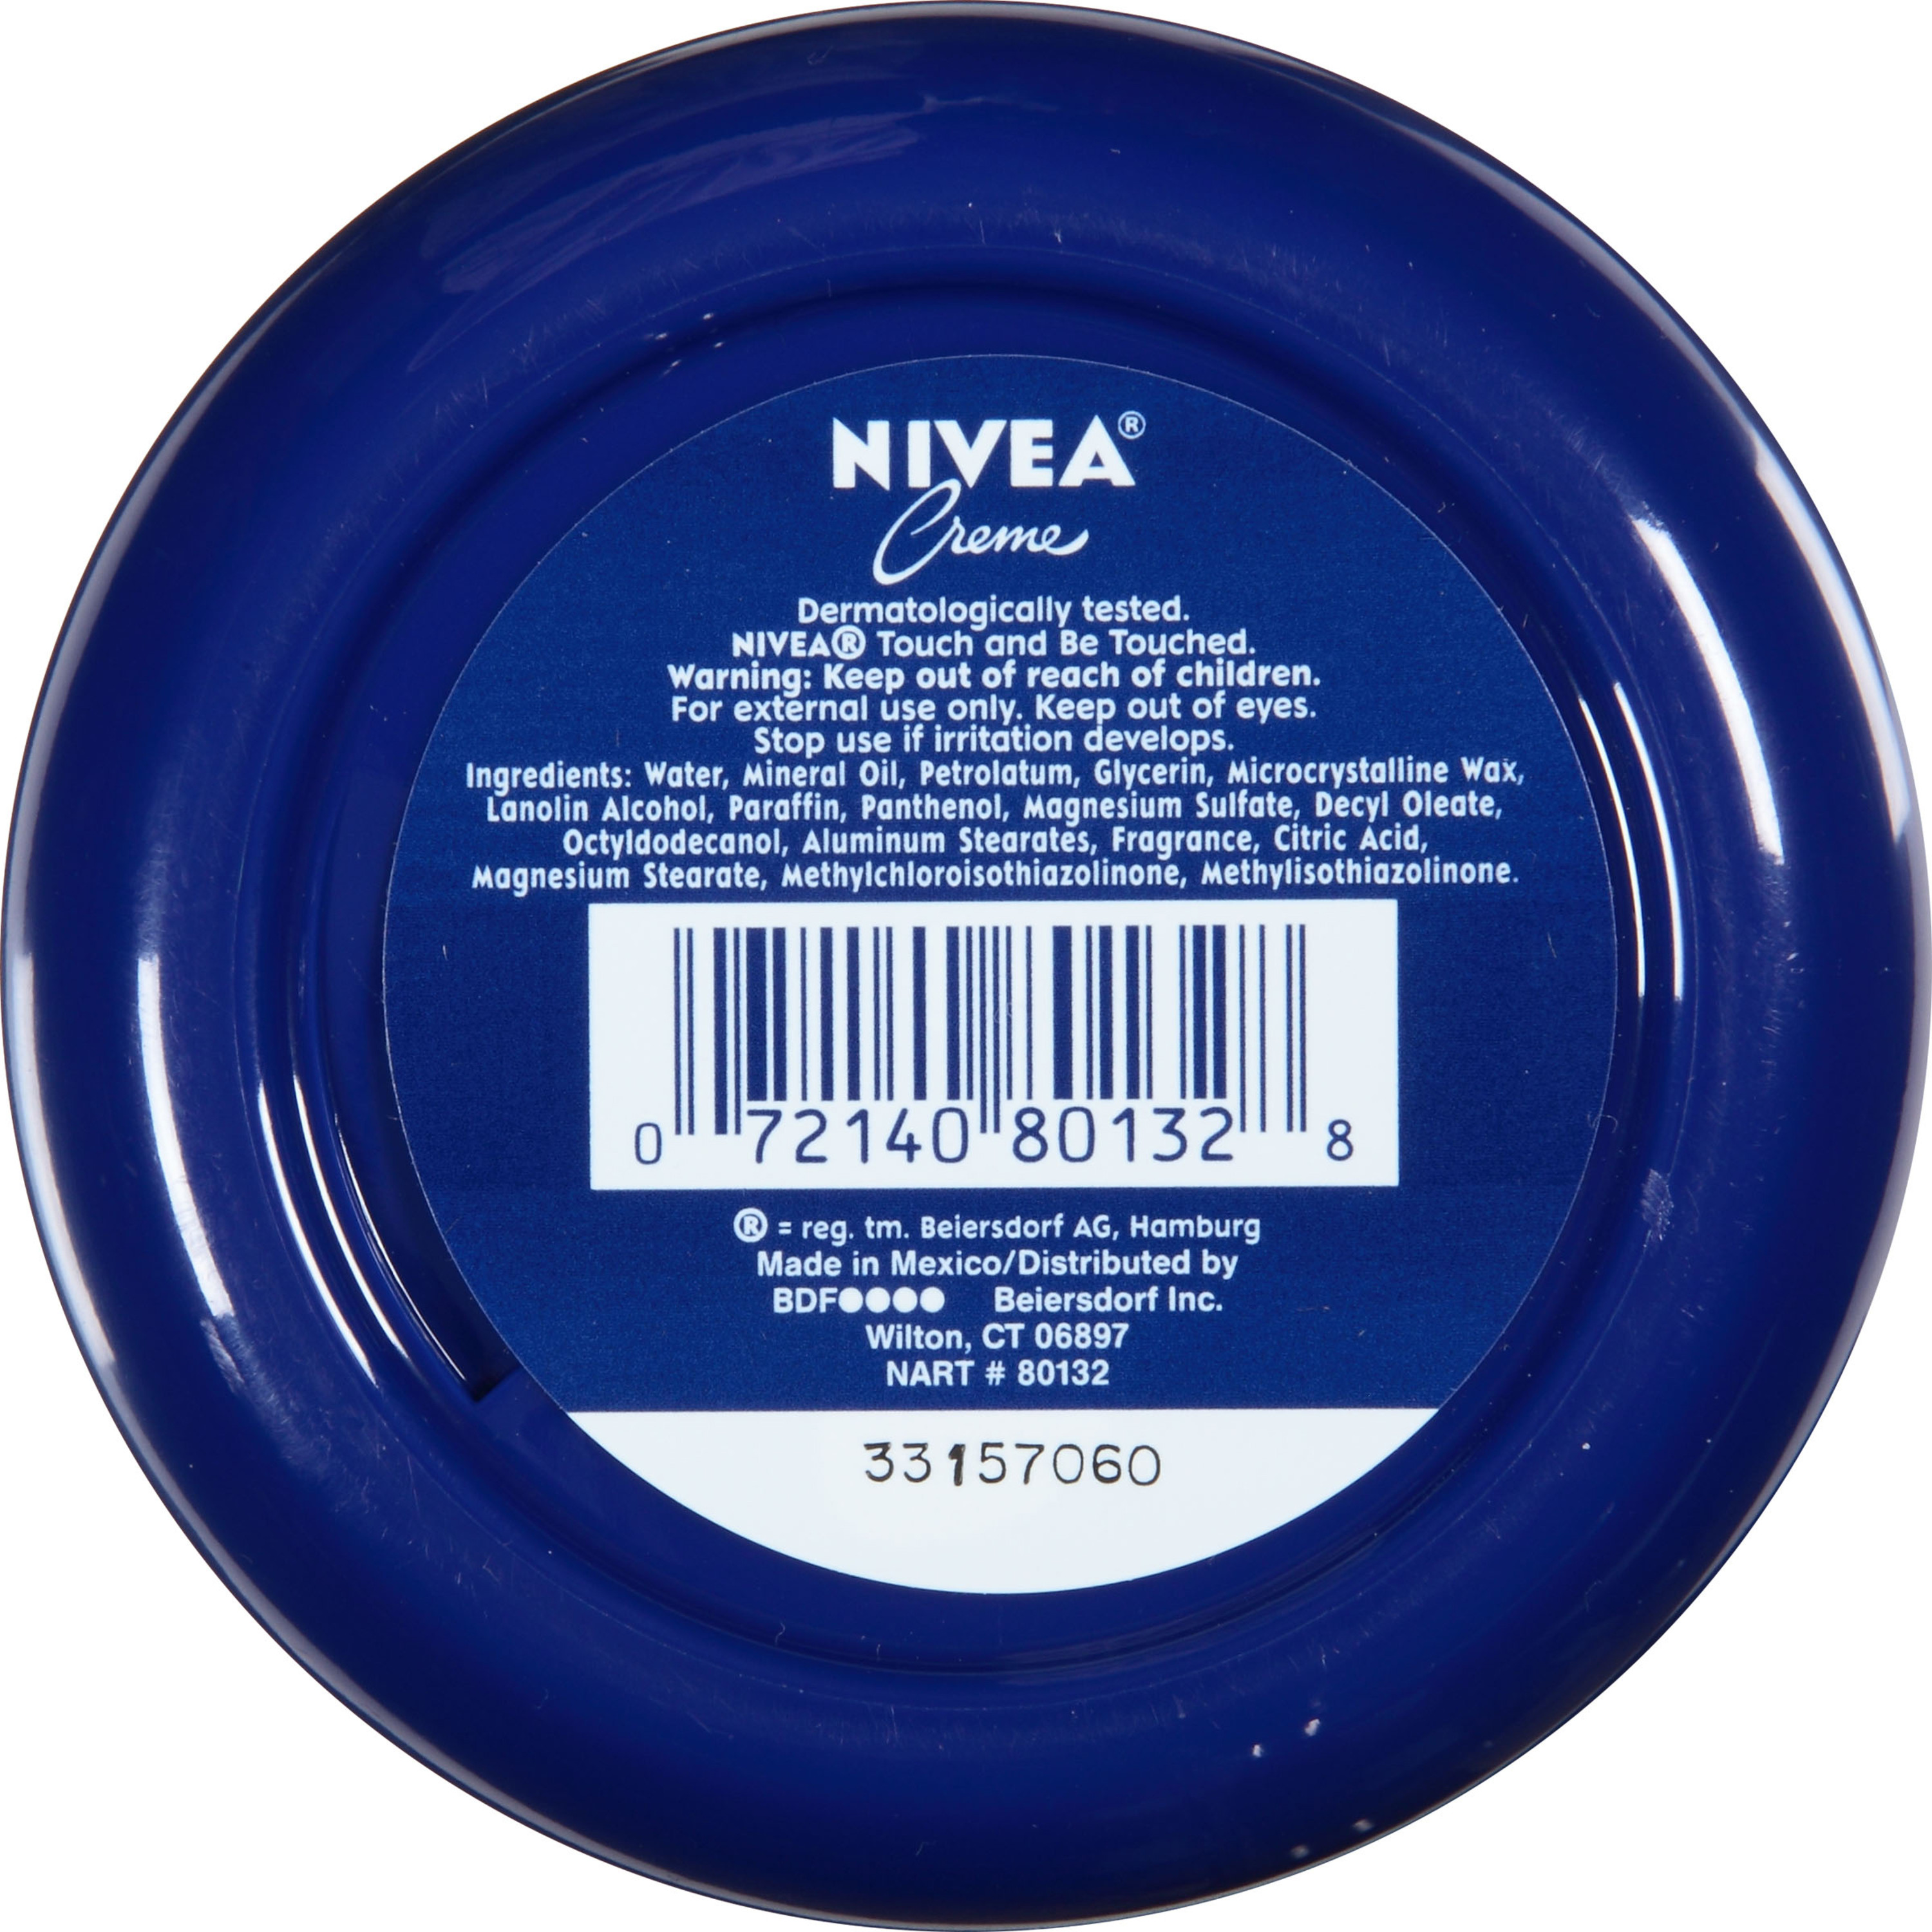 NIVEA Creme Body, Face and Hand Moisturizing Cream, 6.8 Oz Jar - image 14 of 14